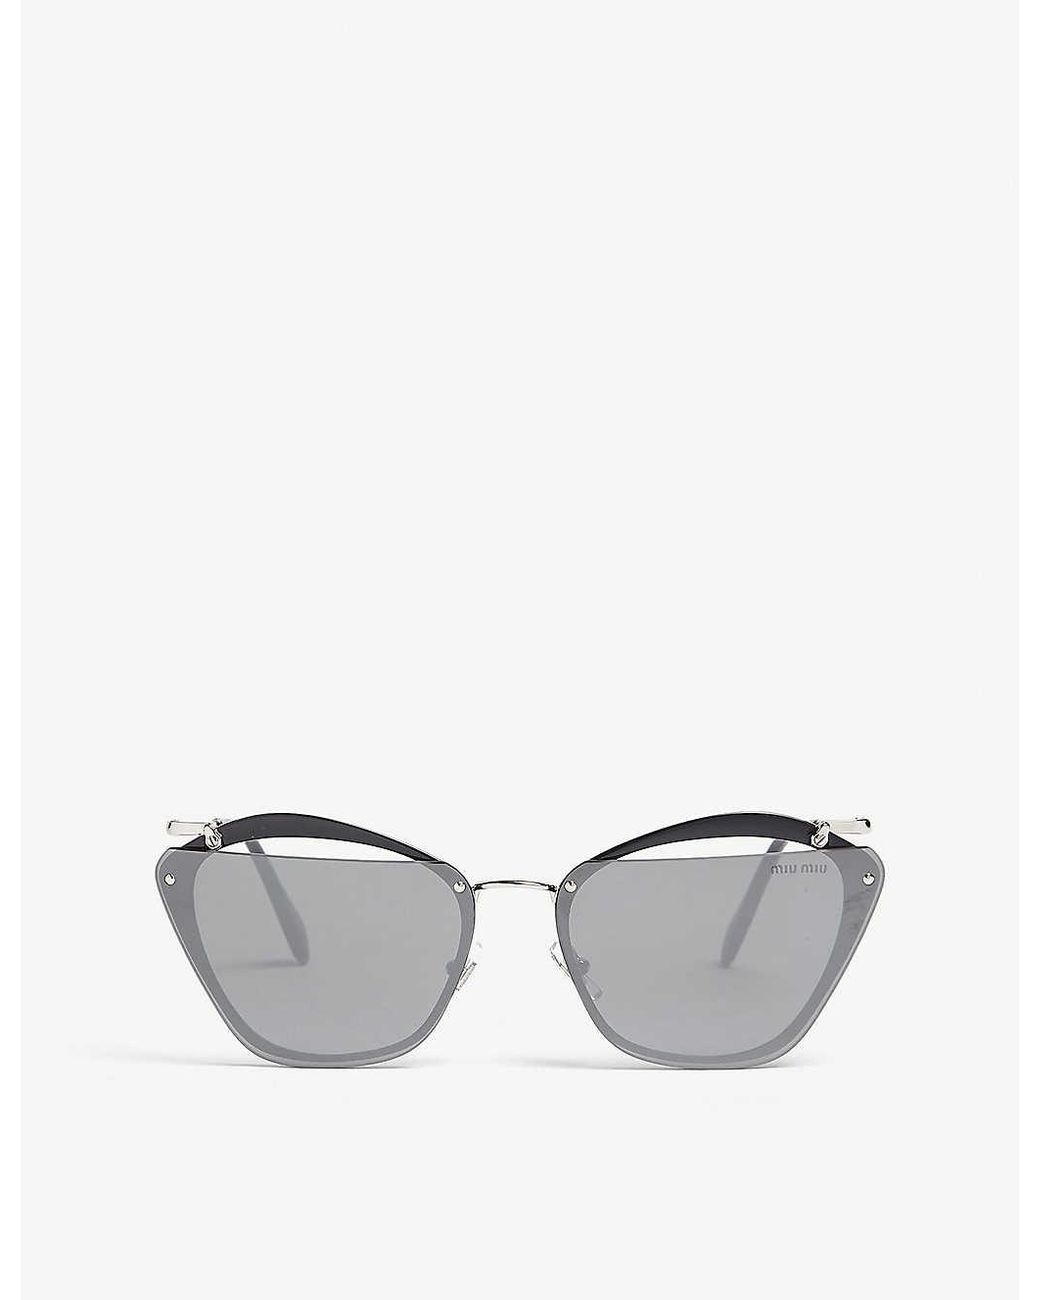 Miu Miu Mu54ts Irregular-frame Sunglasses in Grey (Gray) - Lyst